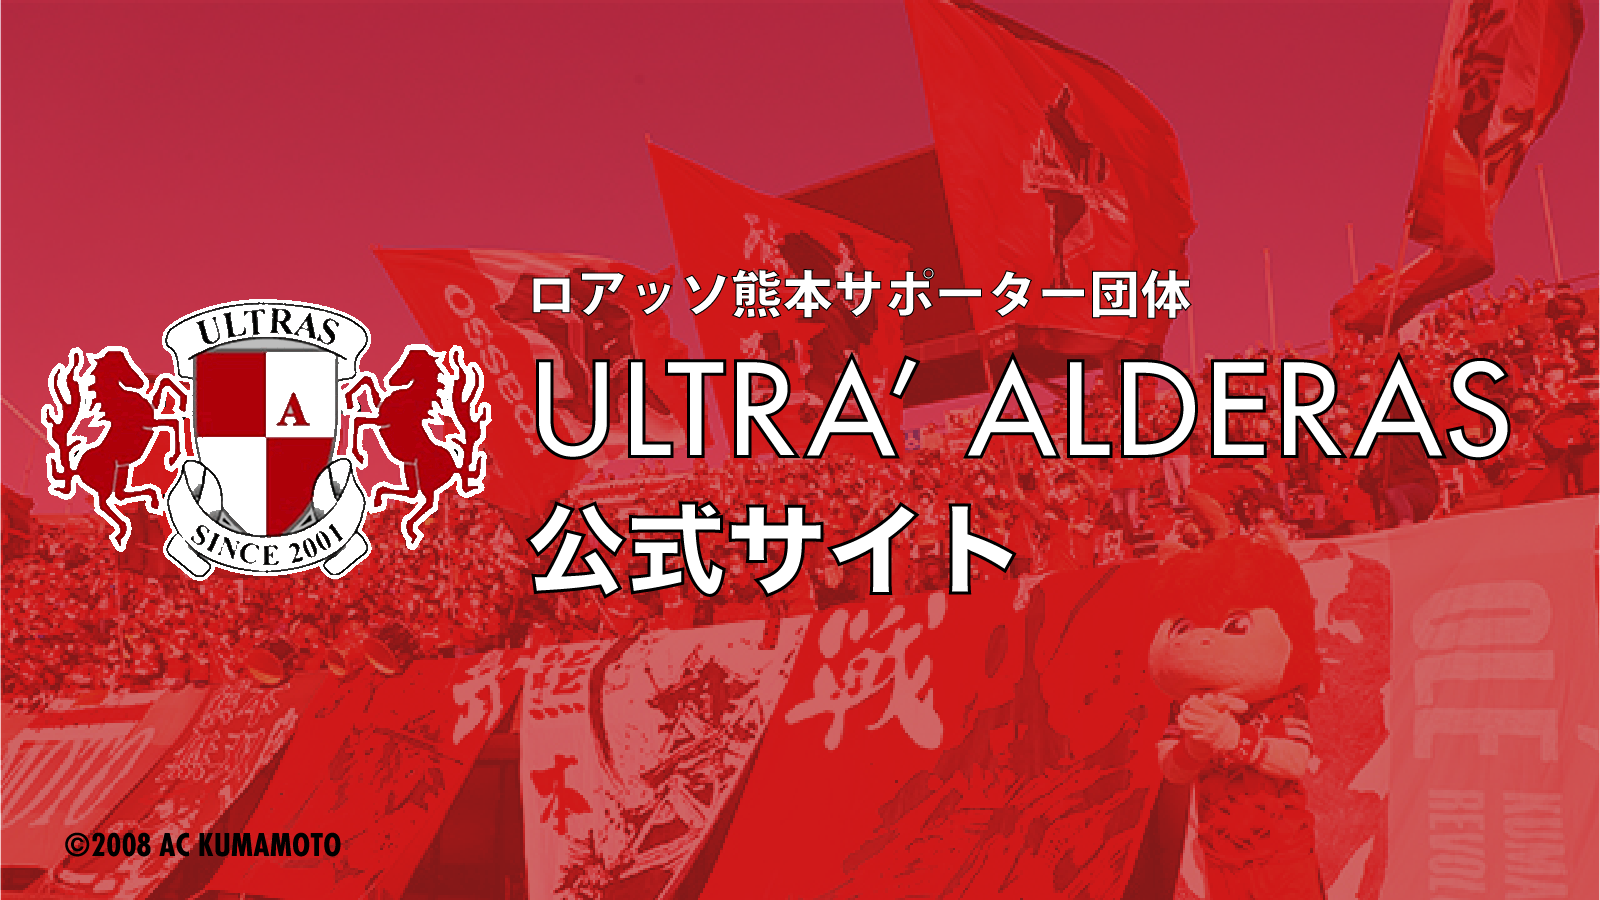 Ultra Alderas Official